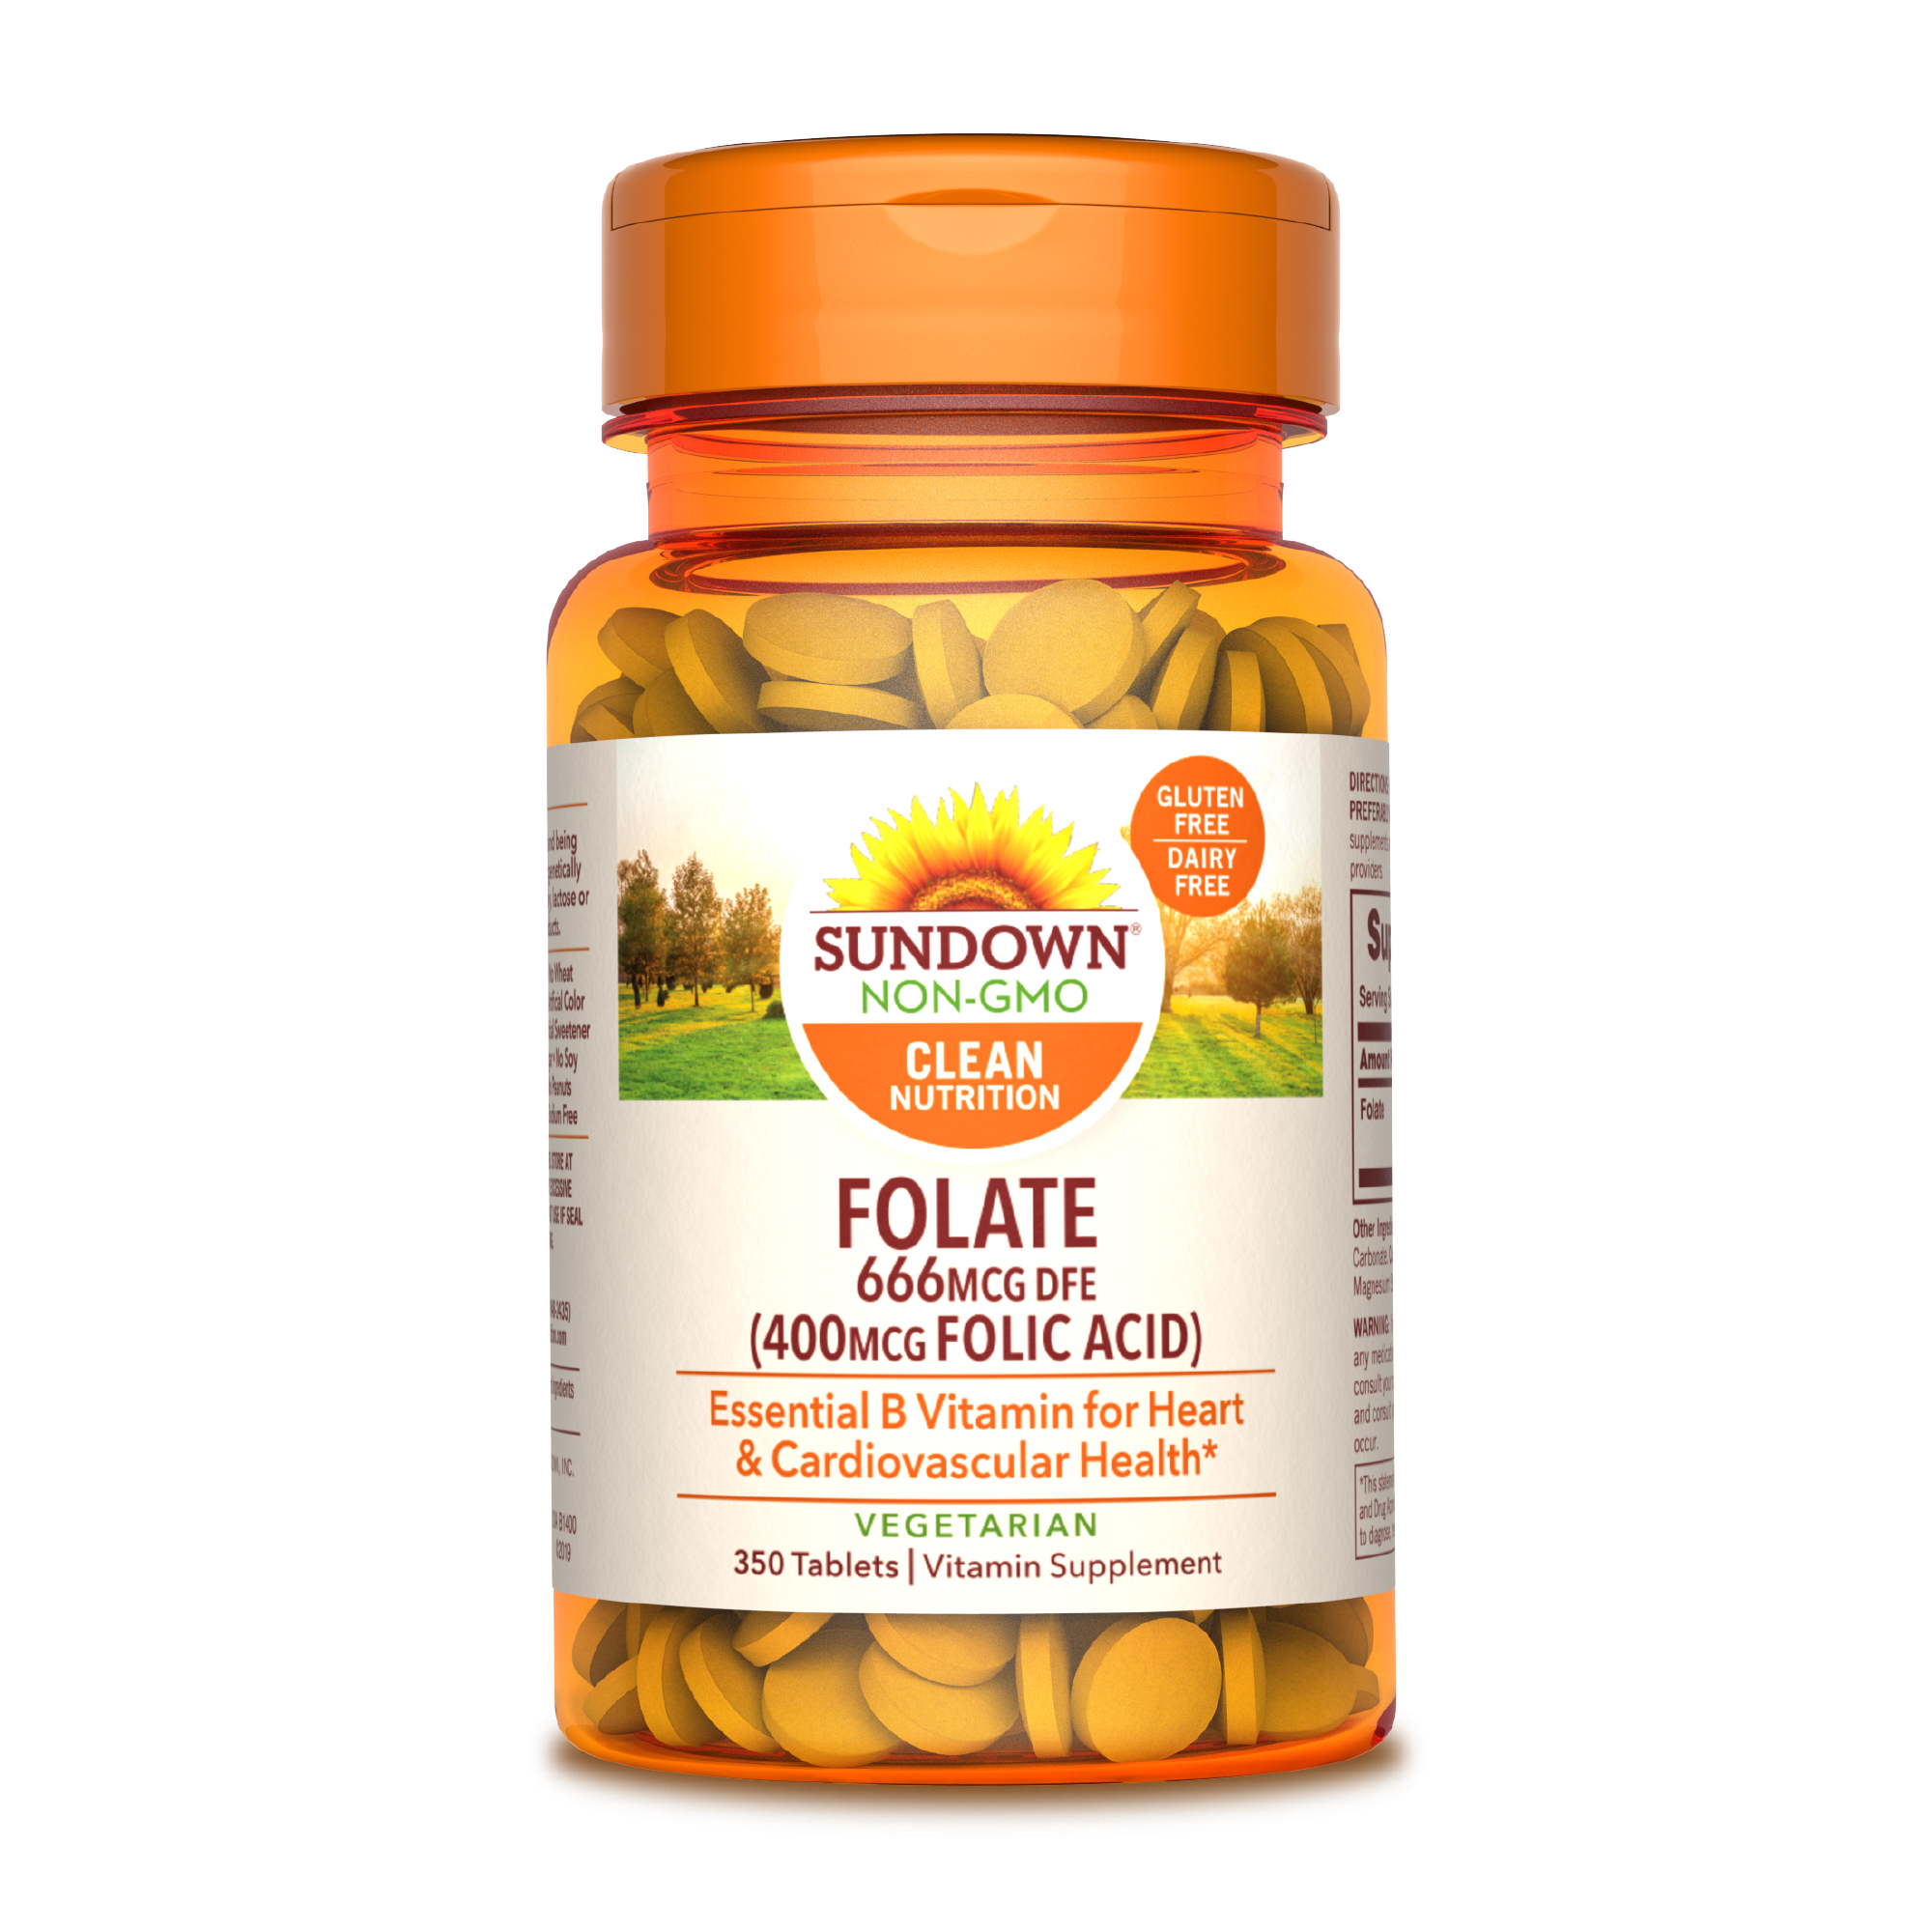 Sundown Folate 400mcg Folic Acid, Supports Heart Health, 350 Tablets (Packaging May Vary) - image 1 of 8